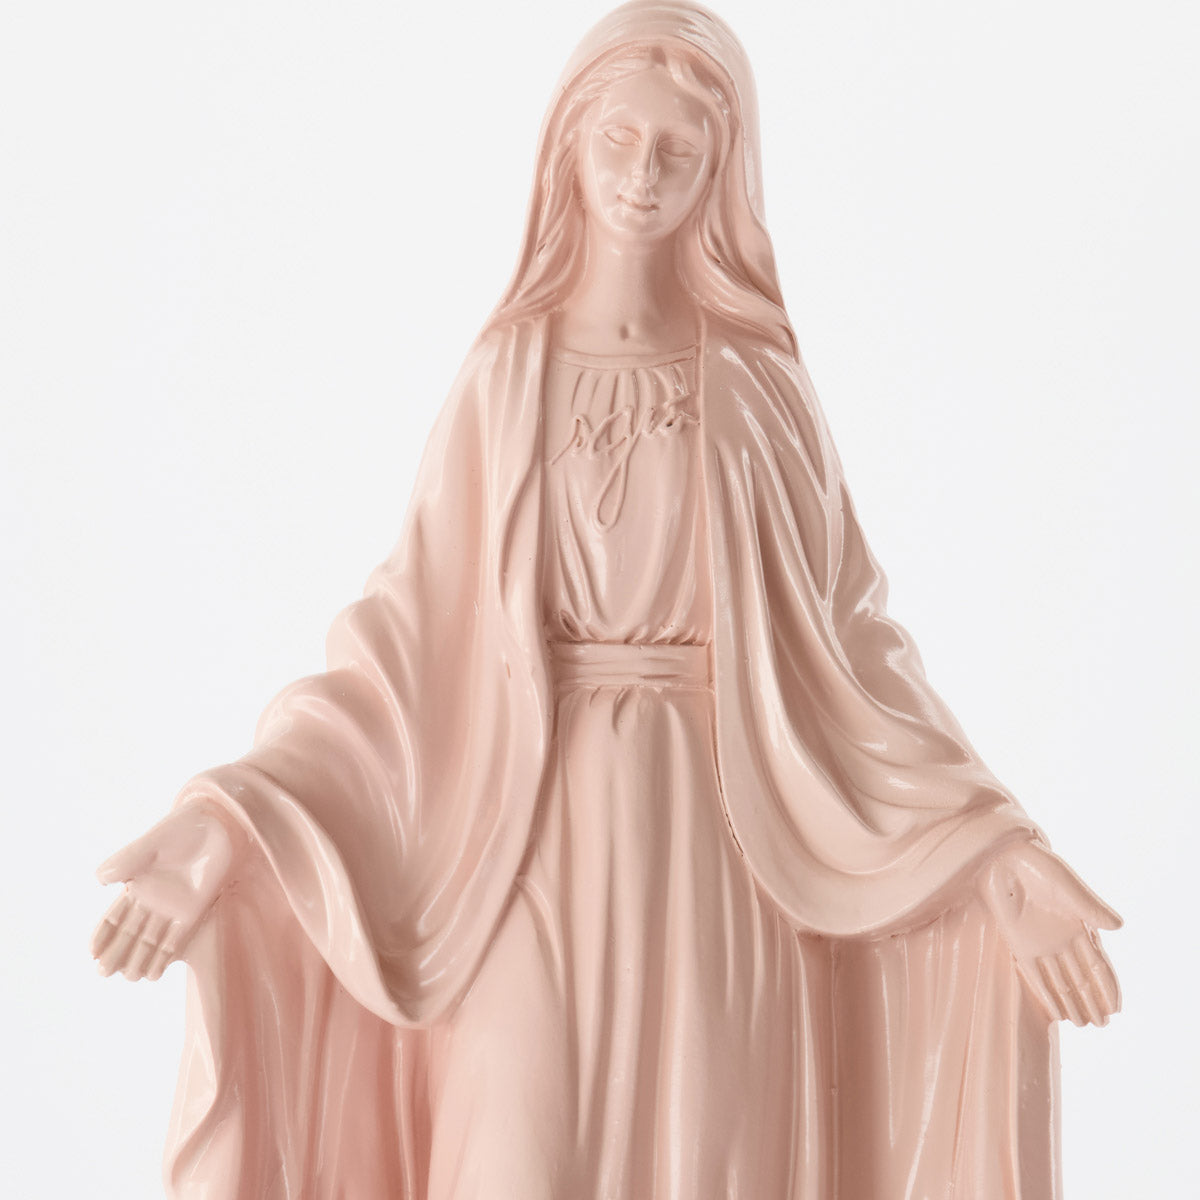 Statue vierge marie miraculeuse